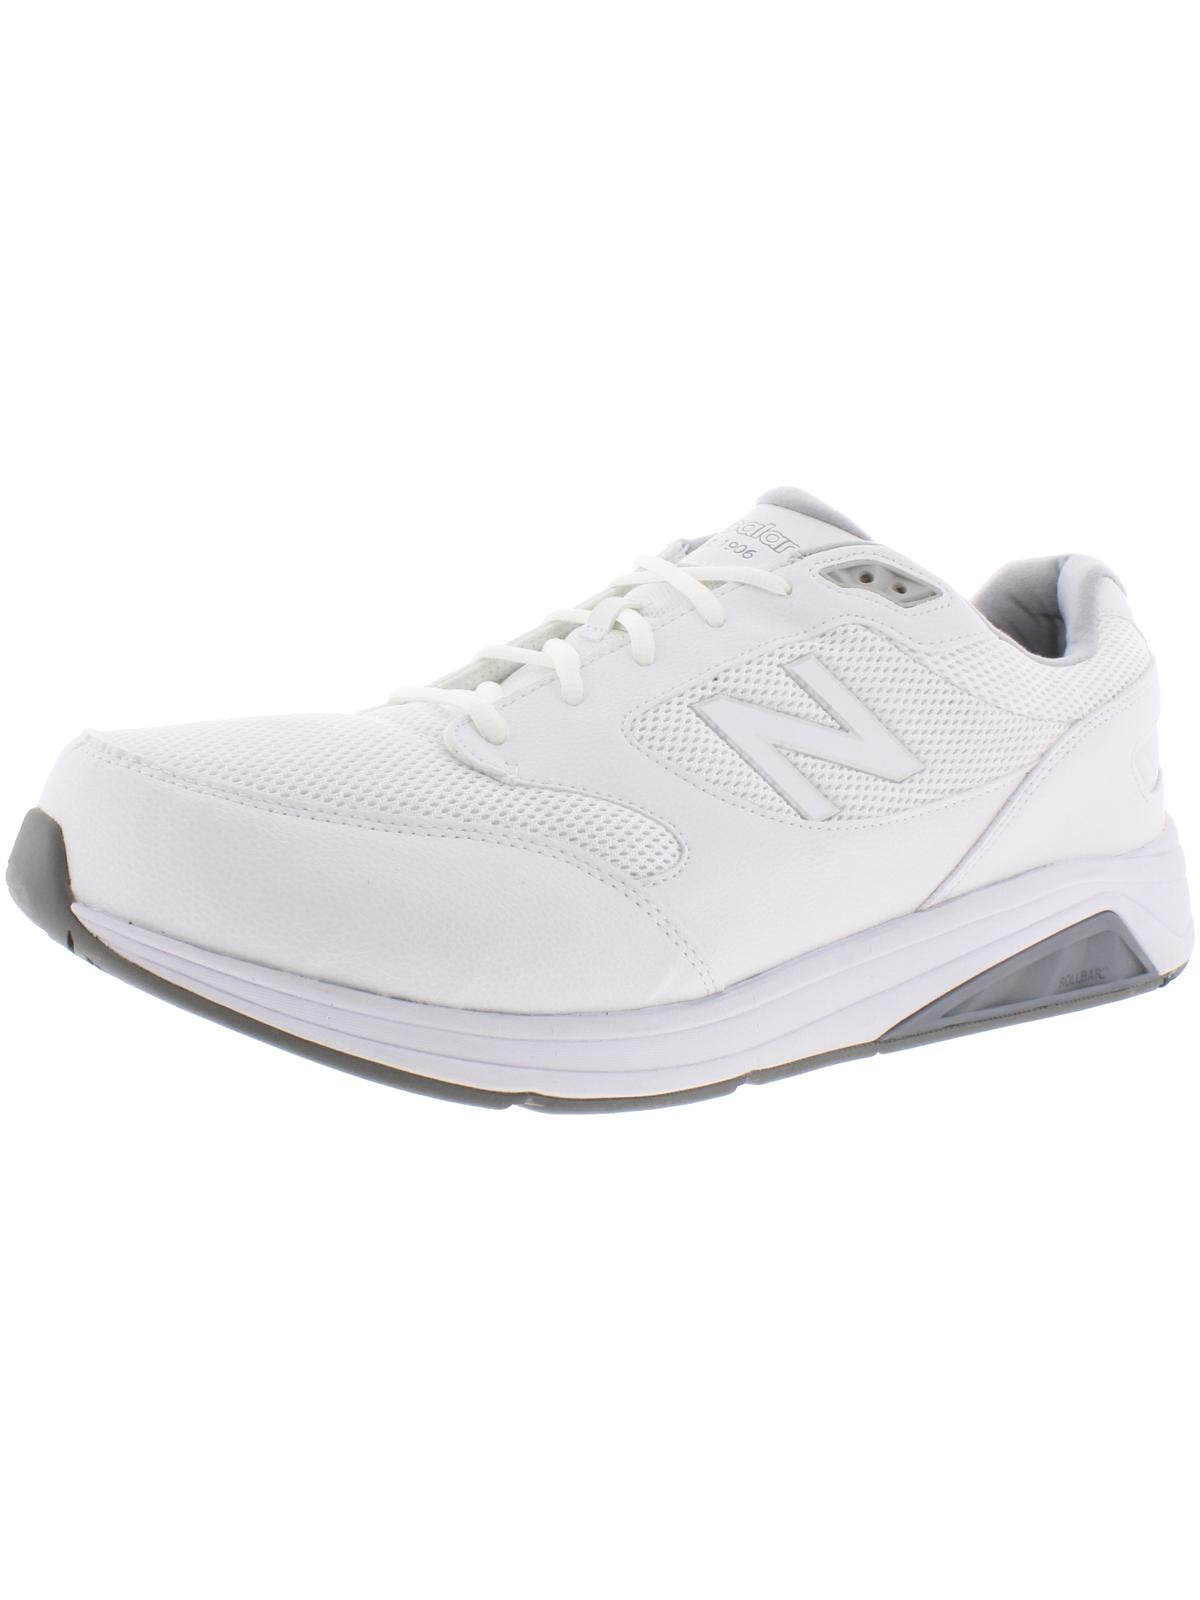 New Balance - New Balance Mens 928 v3 Mesh Fitness Walking Shoes White ...